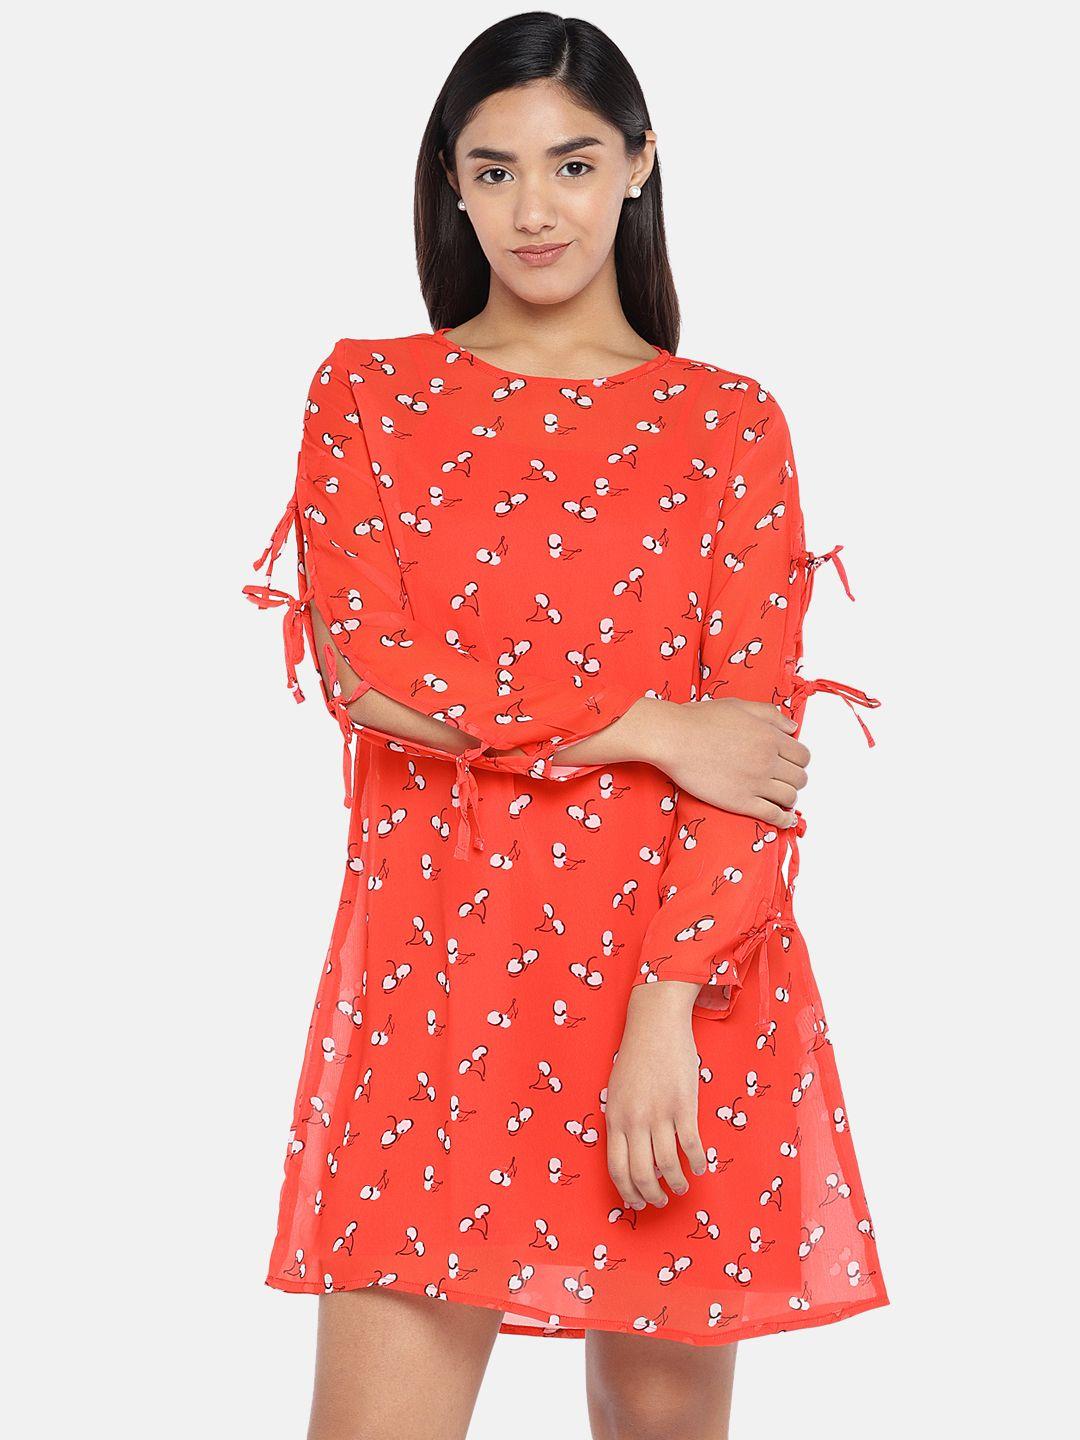 globus women red printed a-line dress